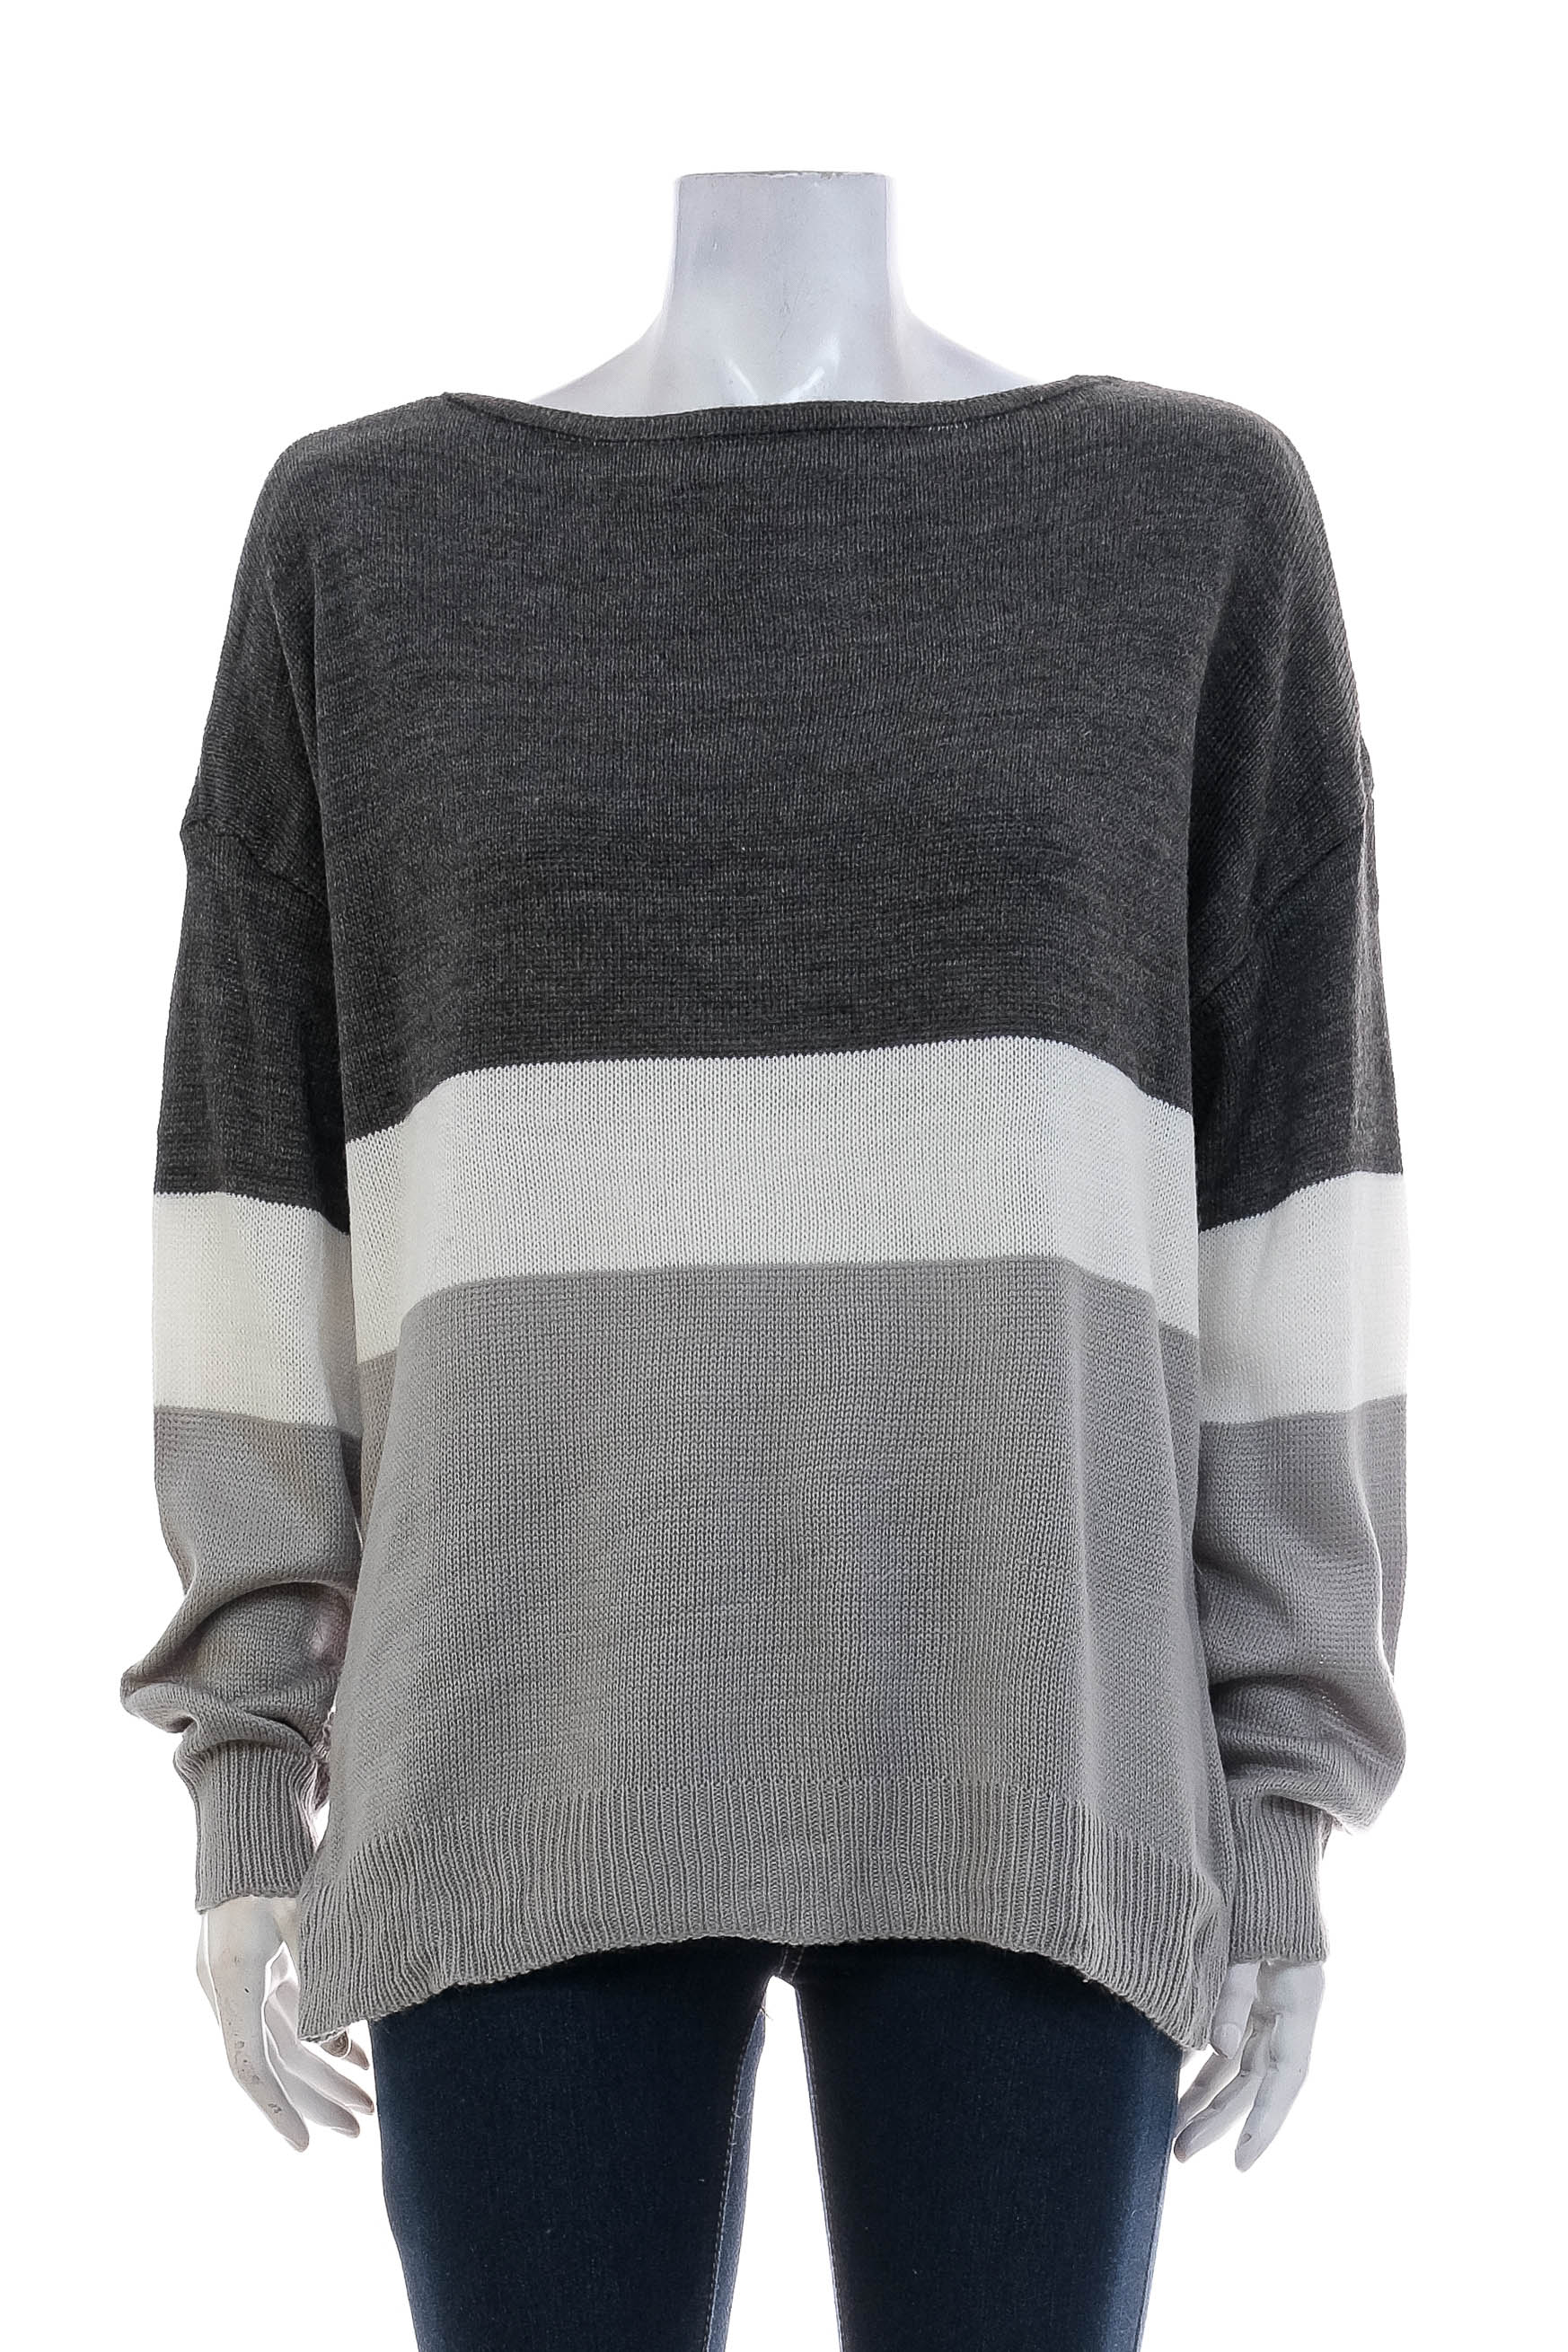 Women's sweater - AQE fashion - 0